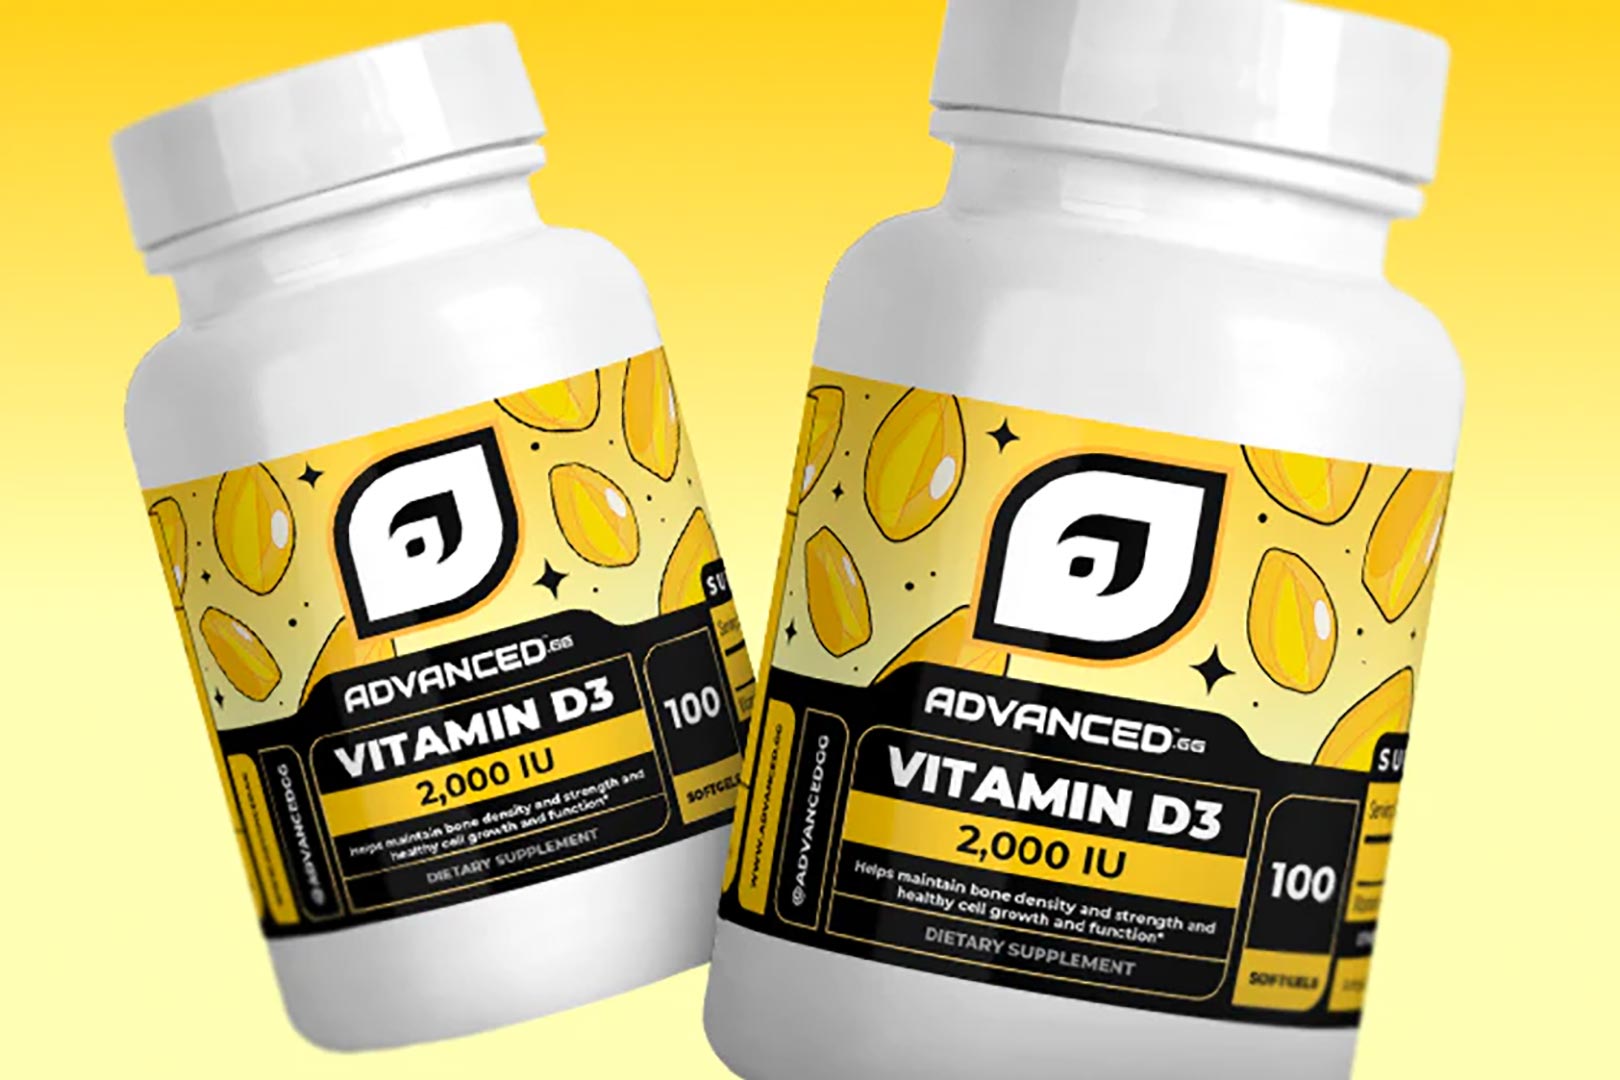 Advancedgg Vitamin D3